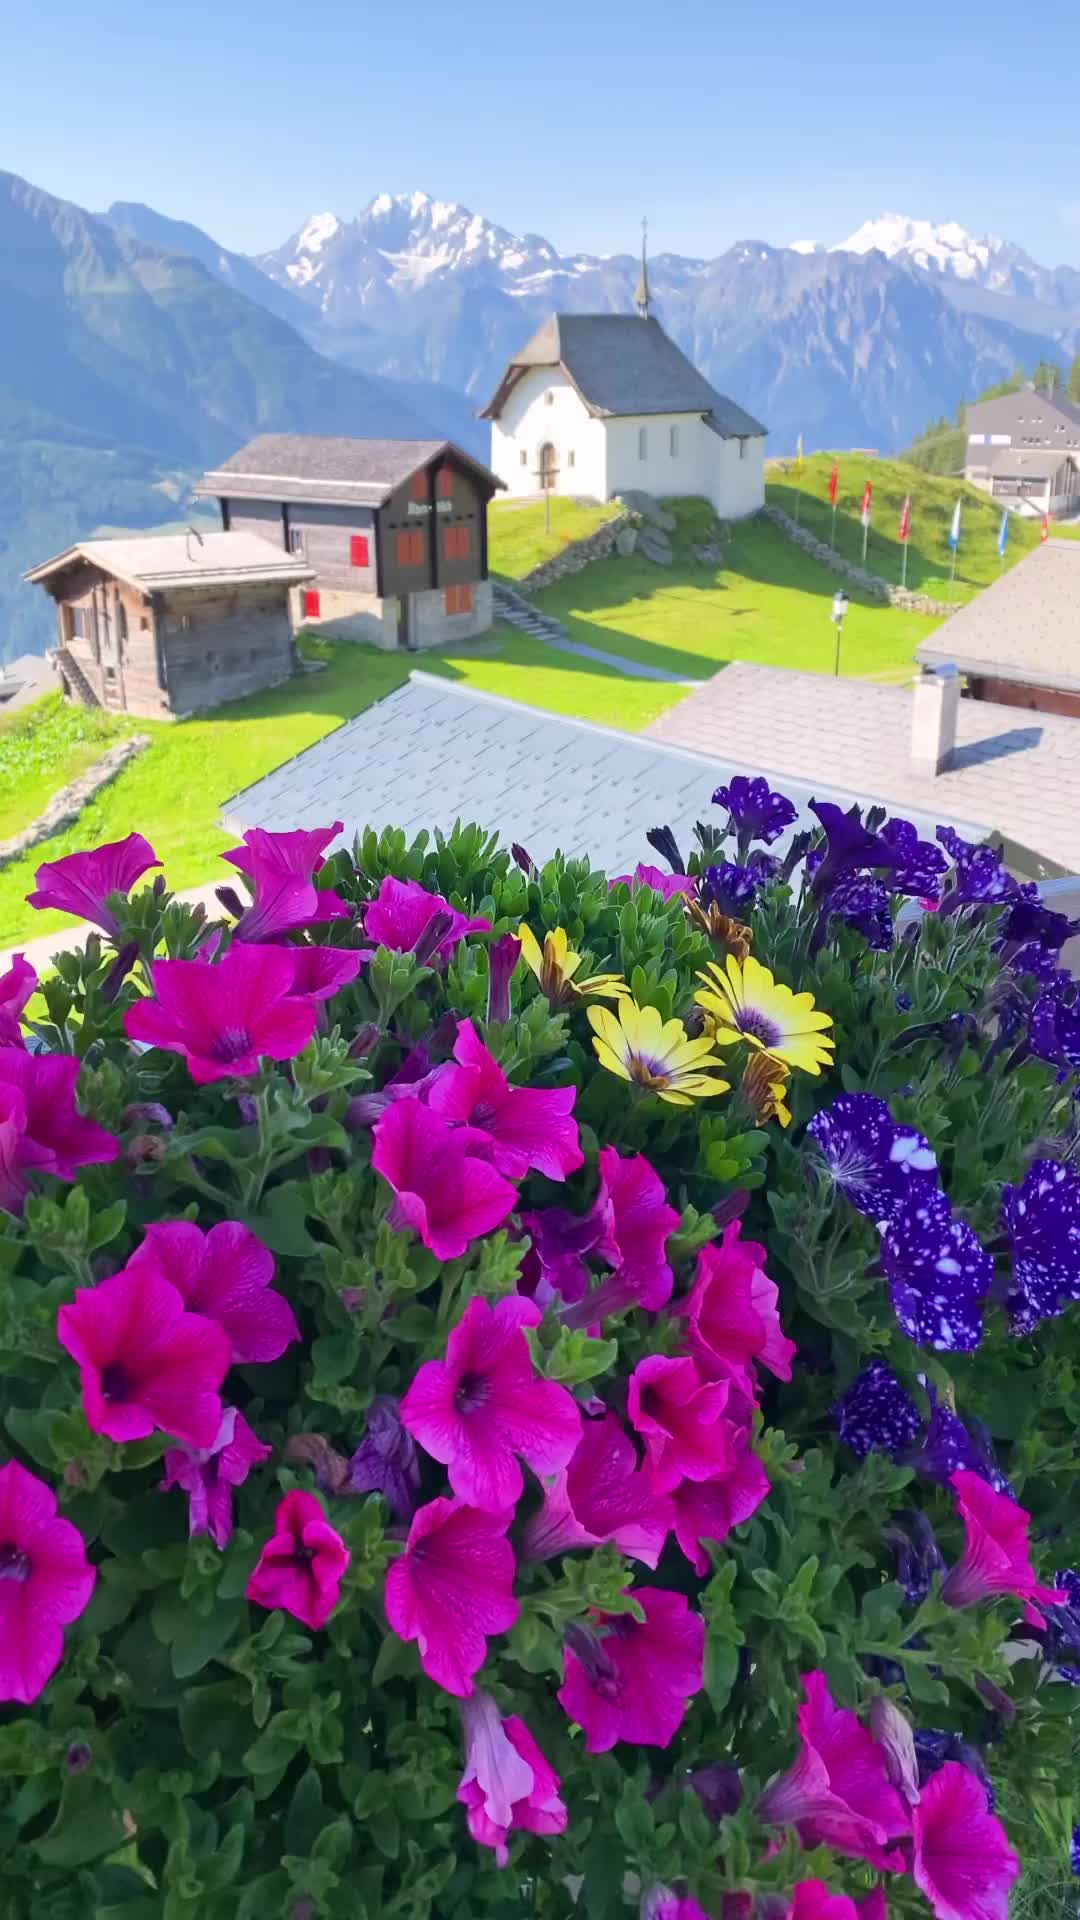 Spring Fever on Bettmeralp: Explore Valais, Switzerland